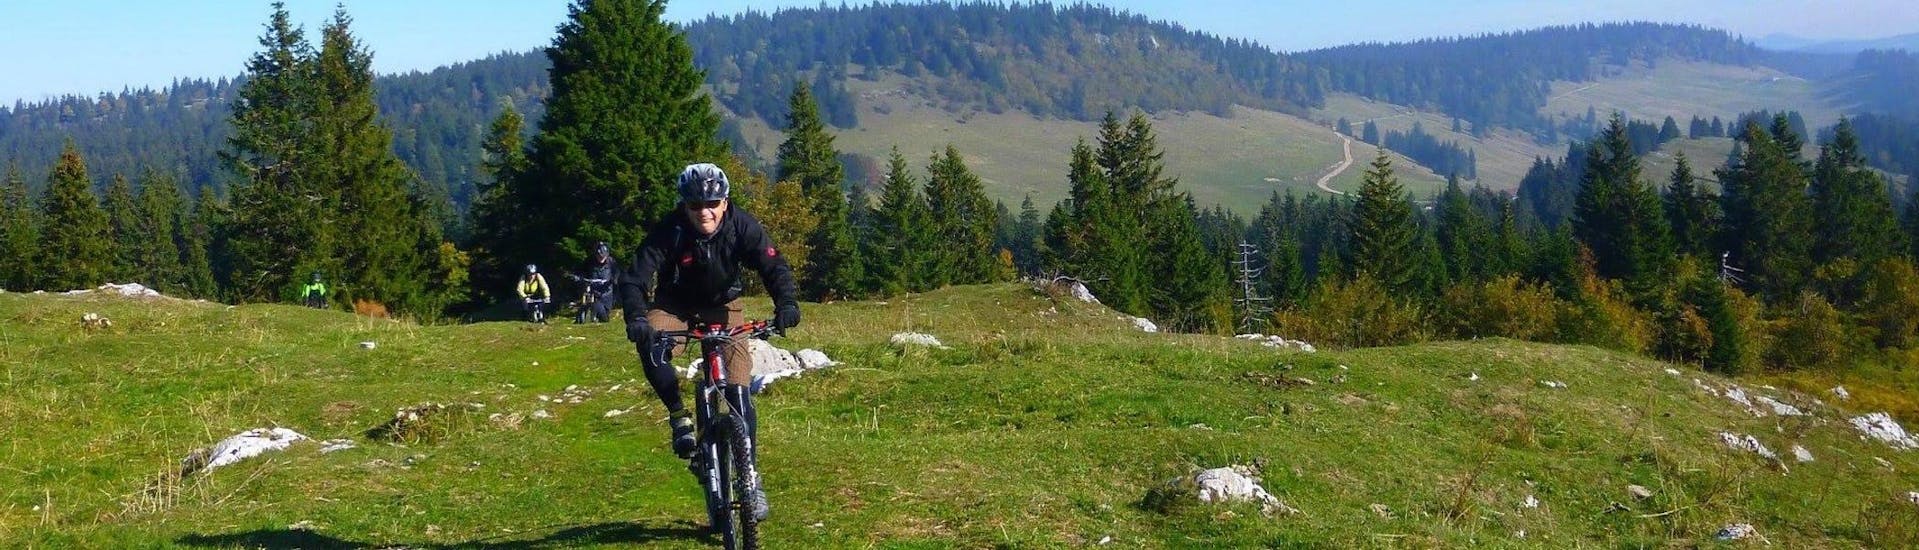 Sportliche Mountainbike-Tour - Parc Jura vaudois.